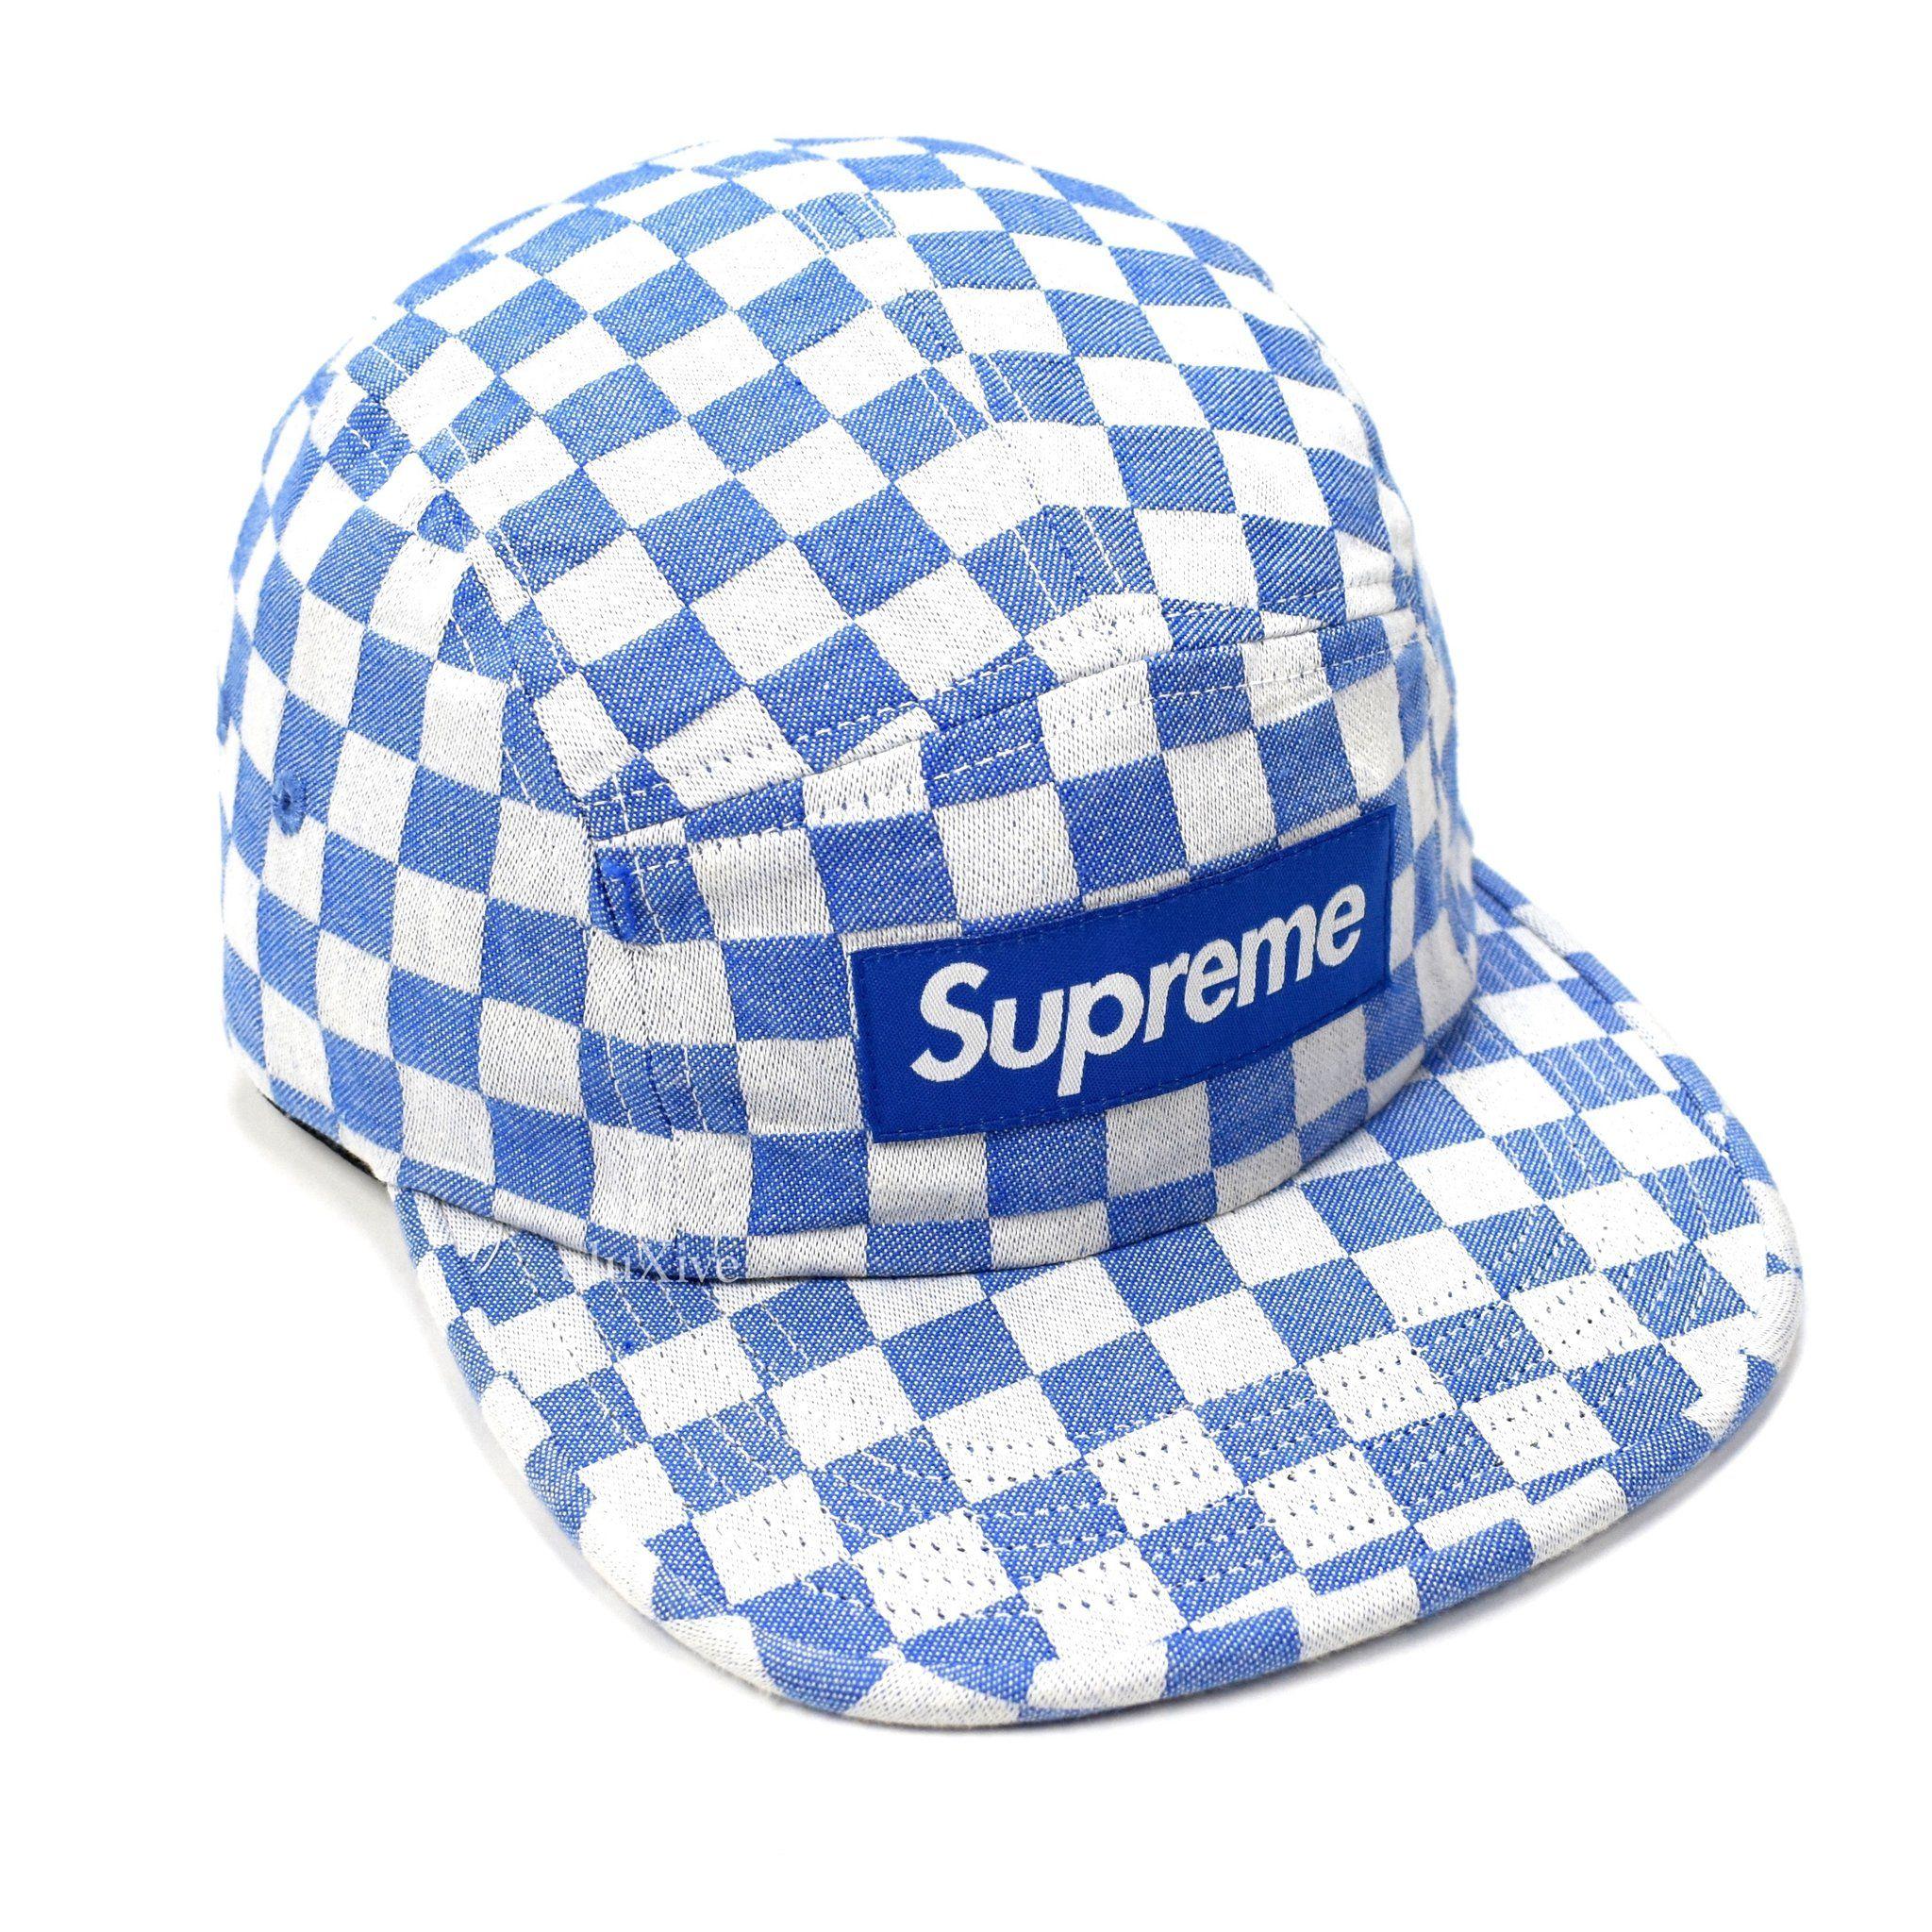 White a Blue Box Logo - Supreme Blue / White Checkered Box Logo Camp Cap Hat